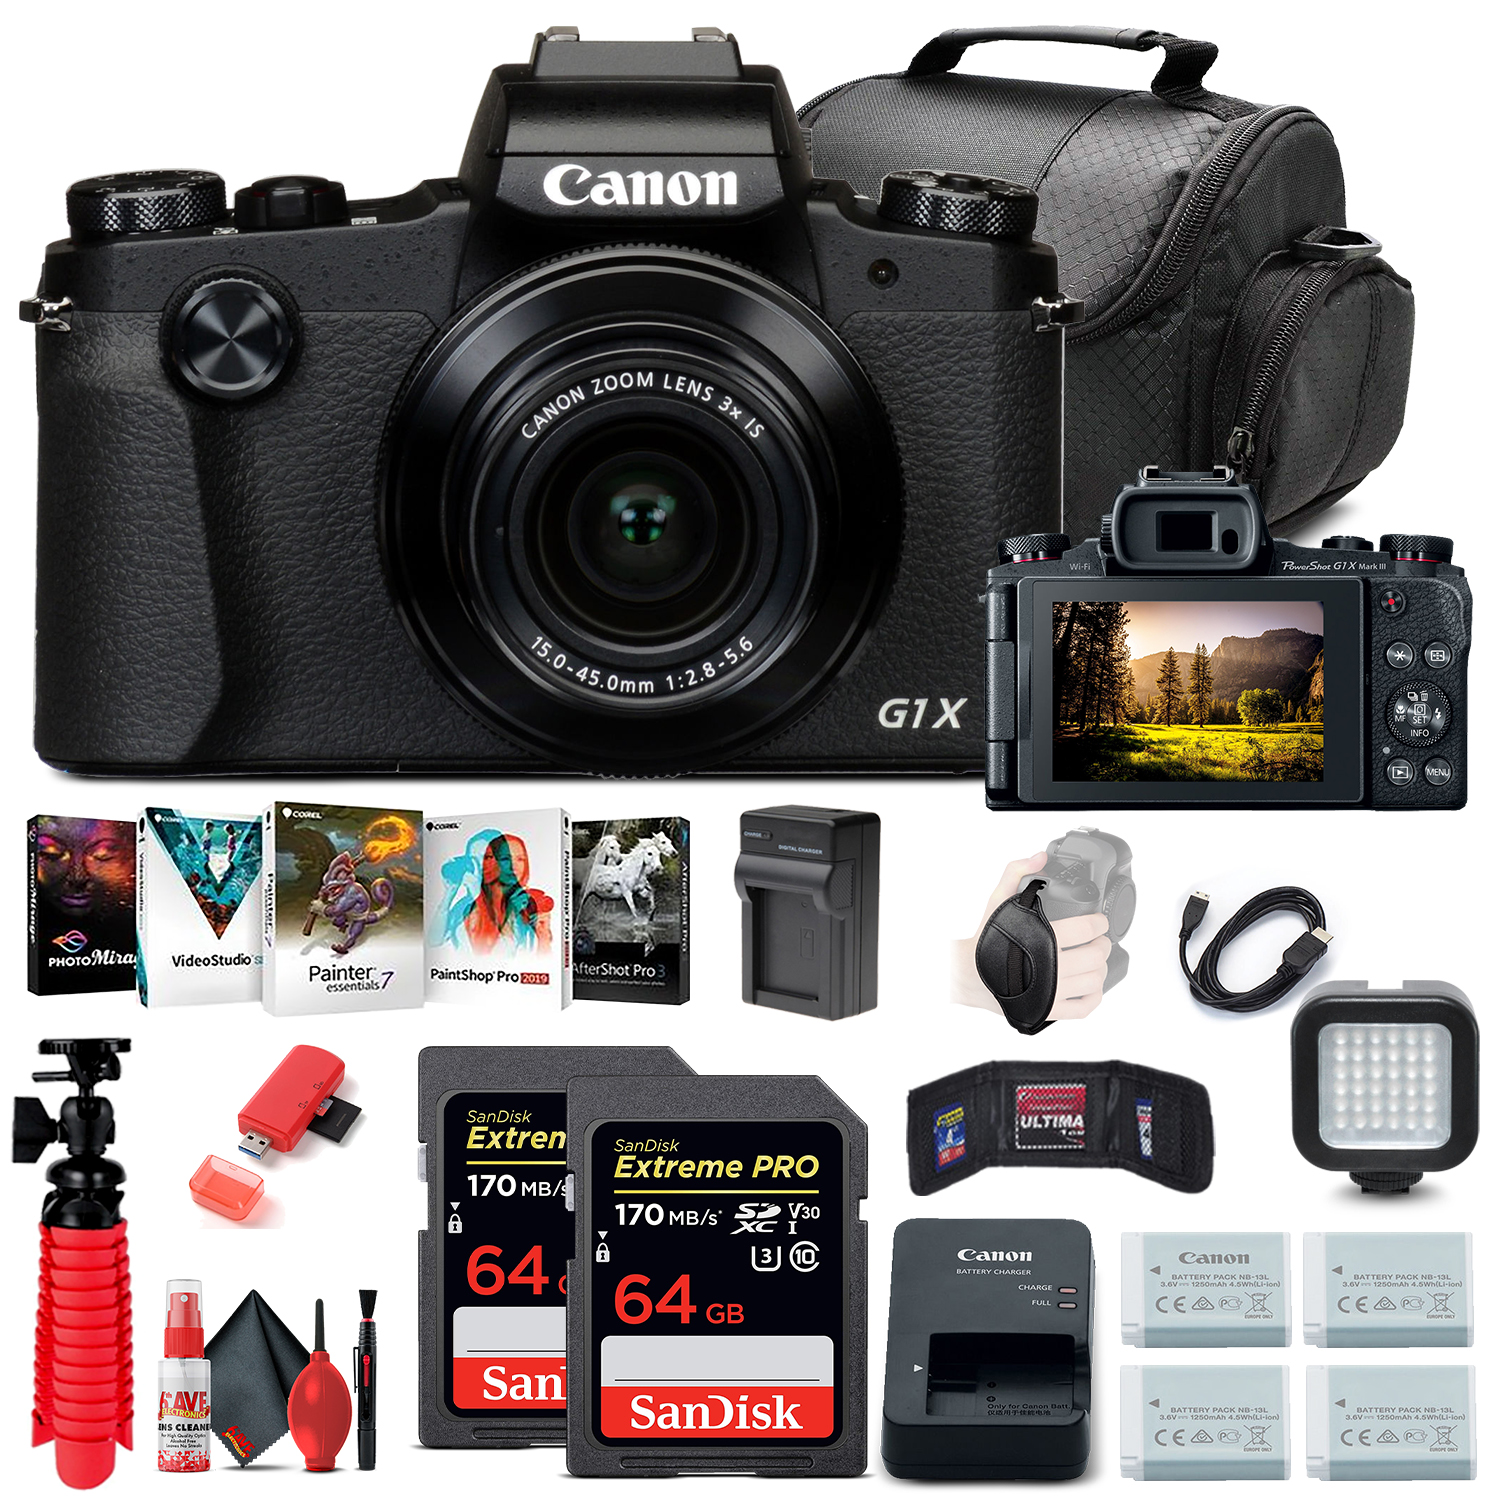 Canon PowerShot G1 X Mark III Digital Camera (2208C001) + 2 x 64GB Cards + More - image 1 of 8